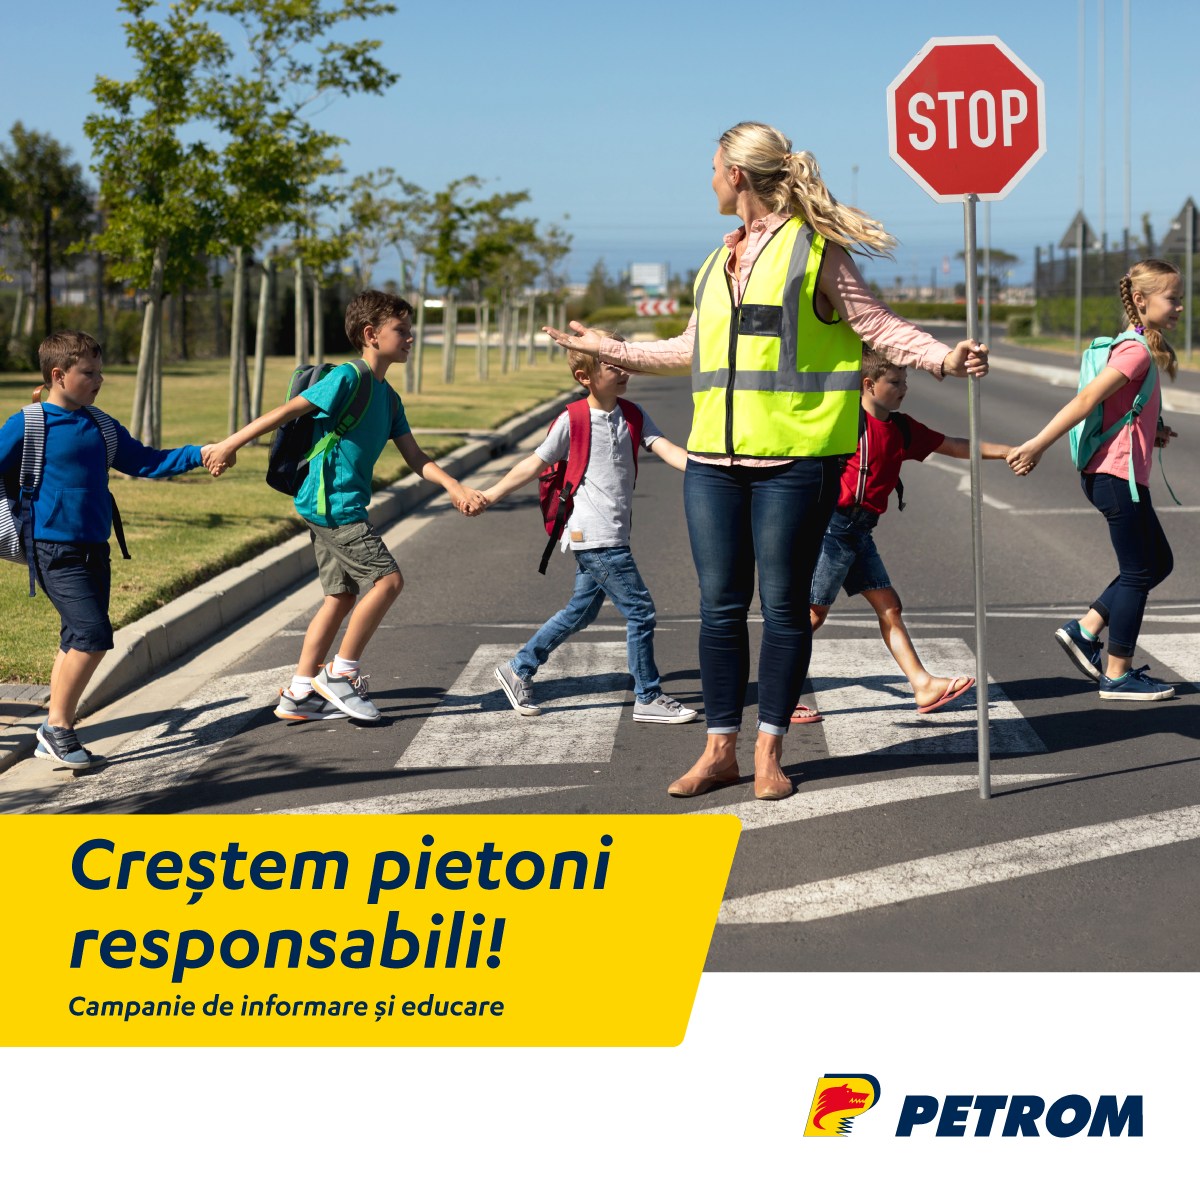 “We educate responsible pedestrians” – Petrom